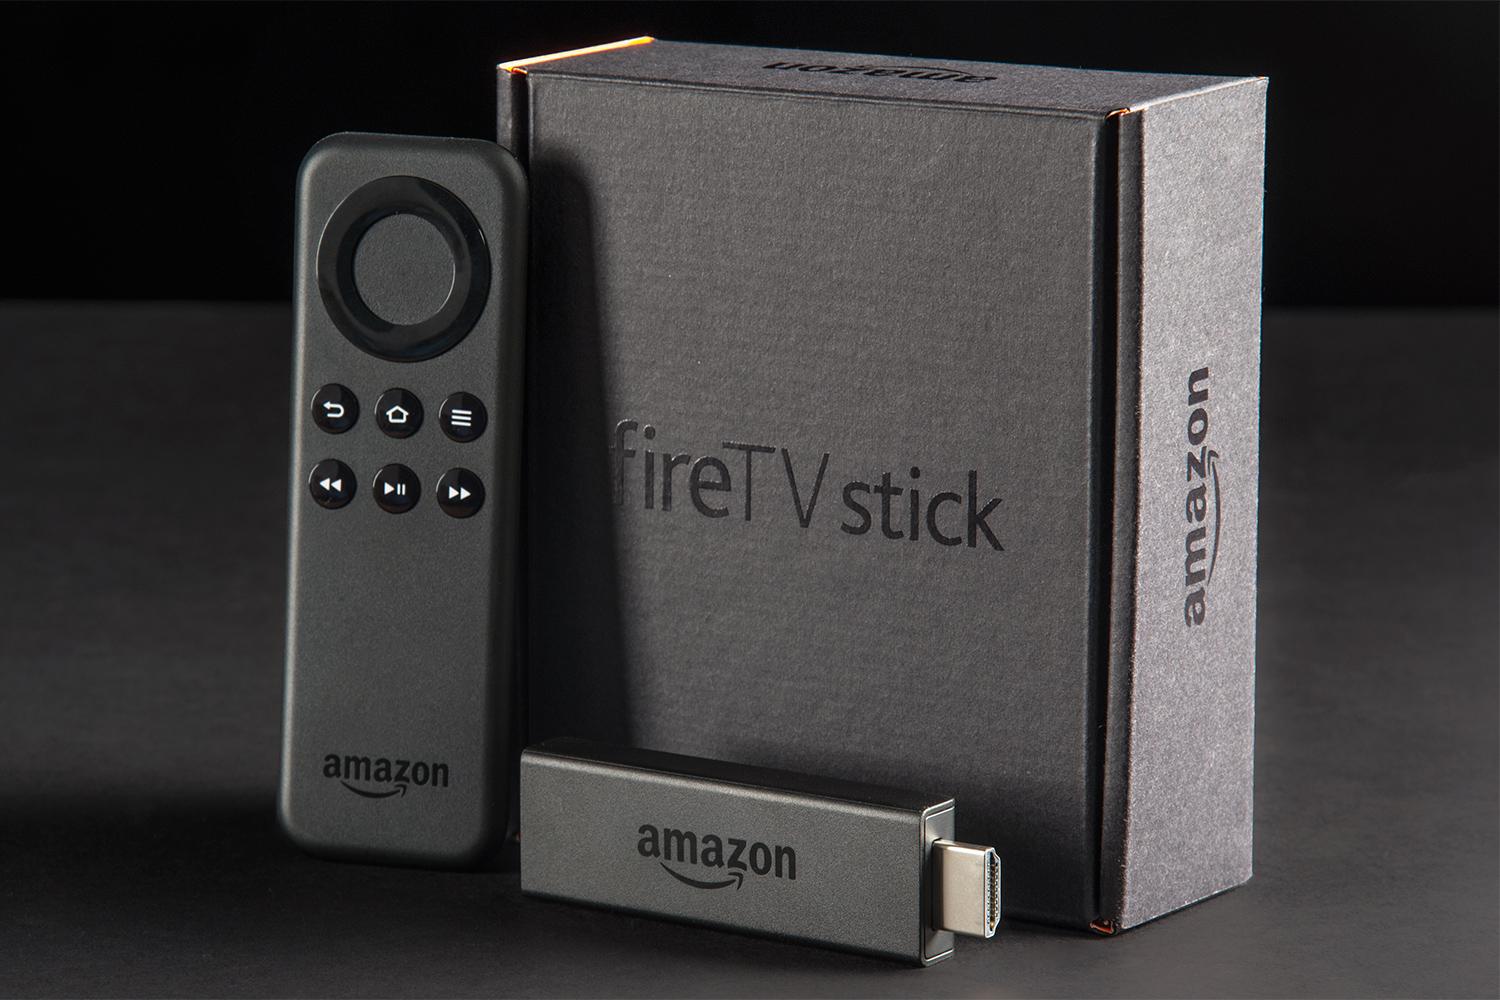 https://www.digitaltrends.com/wp-content/uploads/2014/11/amazon-fire-tv-stick-review-box-remote.jpg?p=1